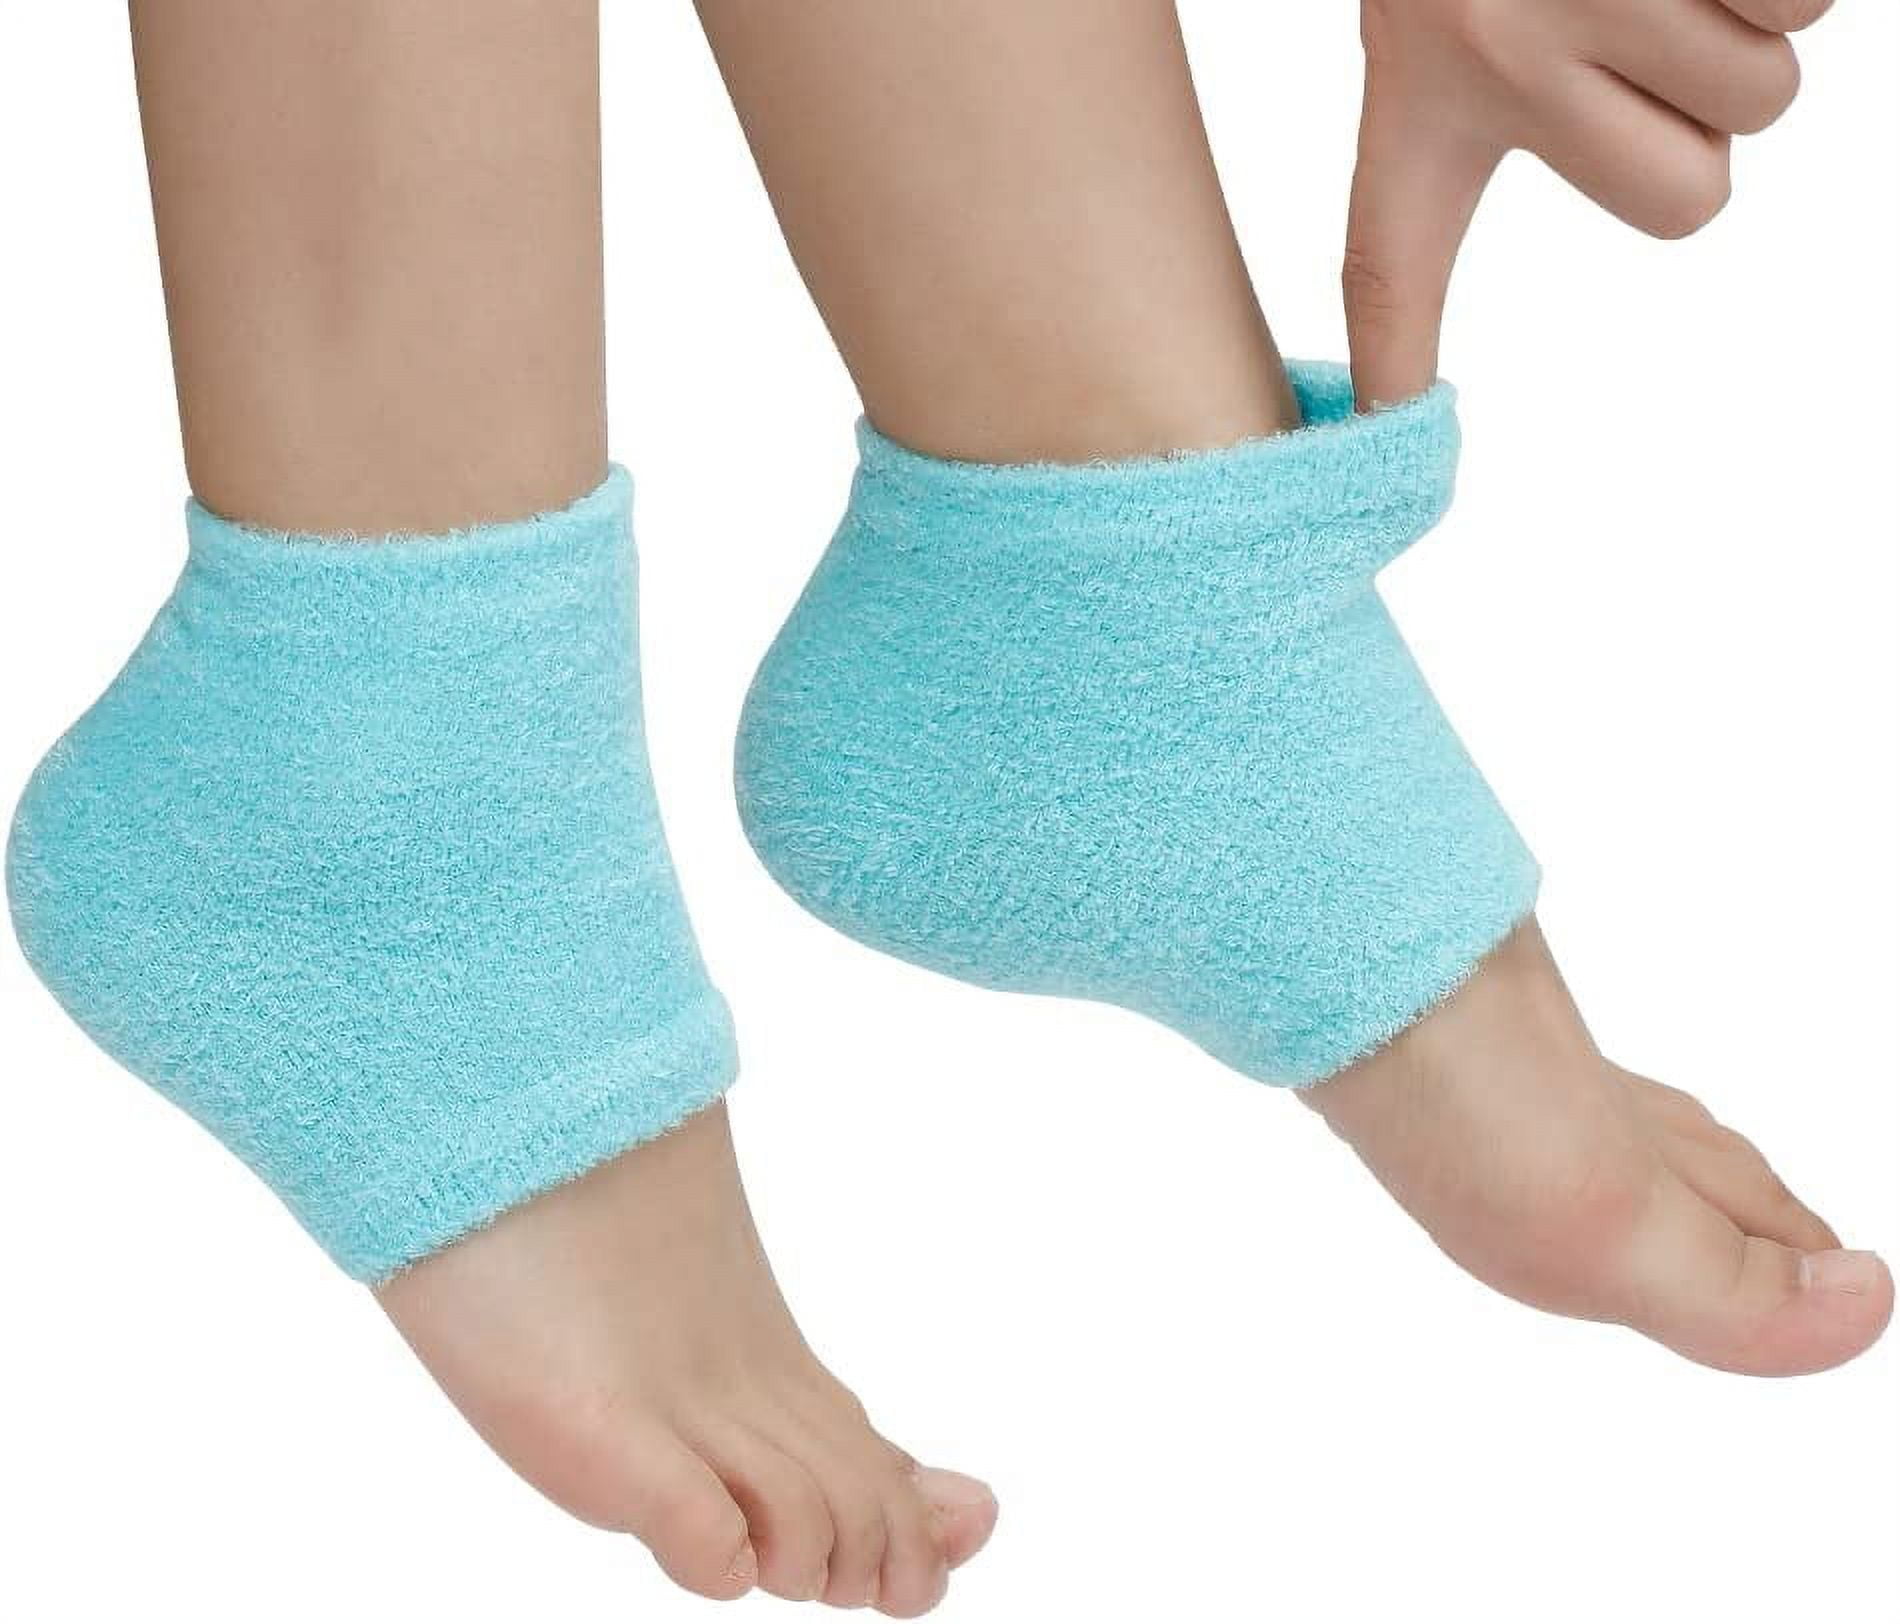 Moisturizing Heel Gel Socks Heal Dry Cracked Treatment Overnight Pedicure Foot Spa Sock 2 Pairs Soft Silicone Moisturizer Sleeve Repair Callus Rough b7f51843 28d2 435d 83f0 b36c20f07b29.0e8157503c85044ead07511ae31f9baf